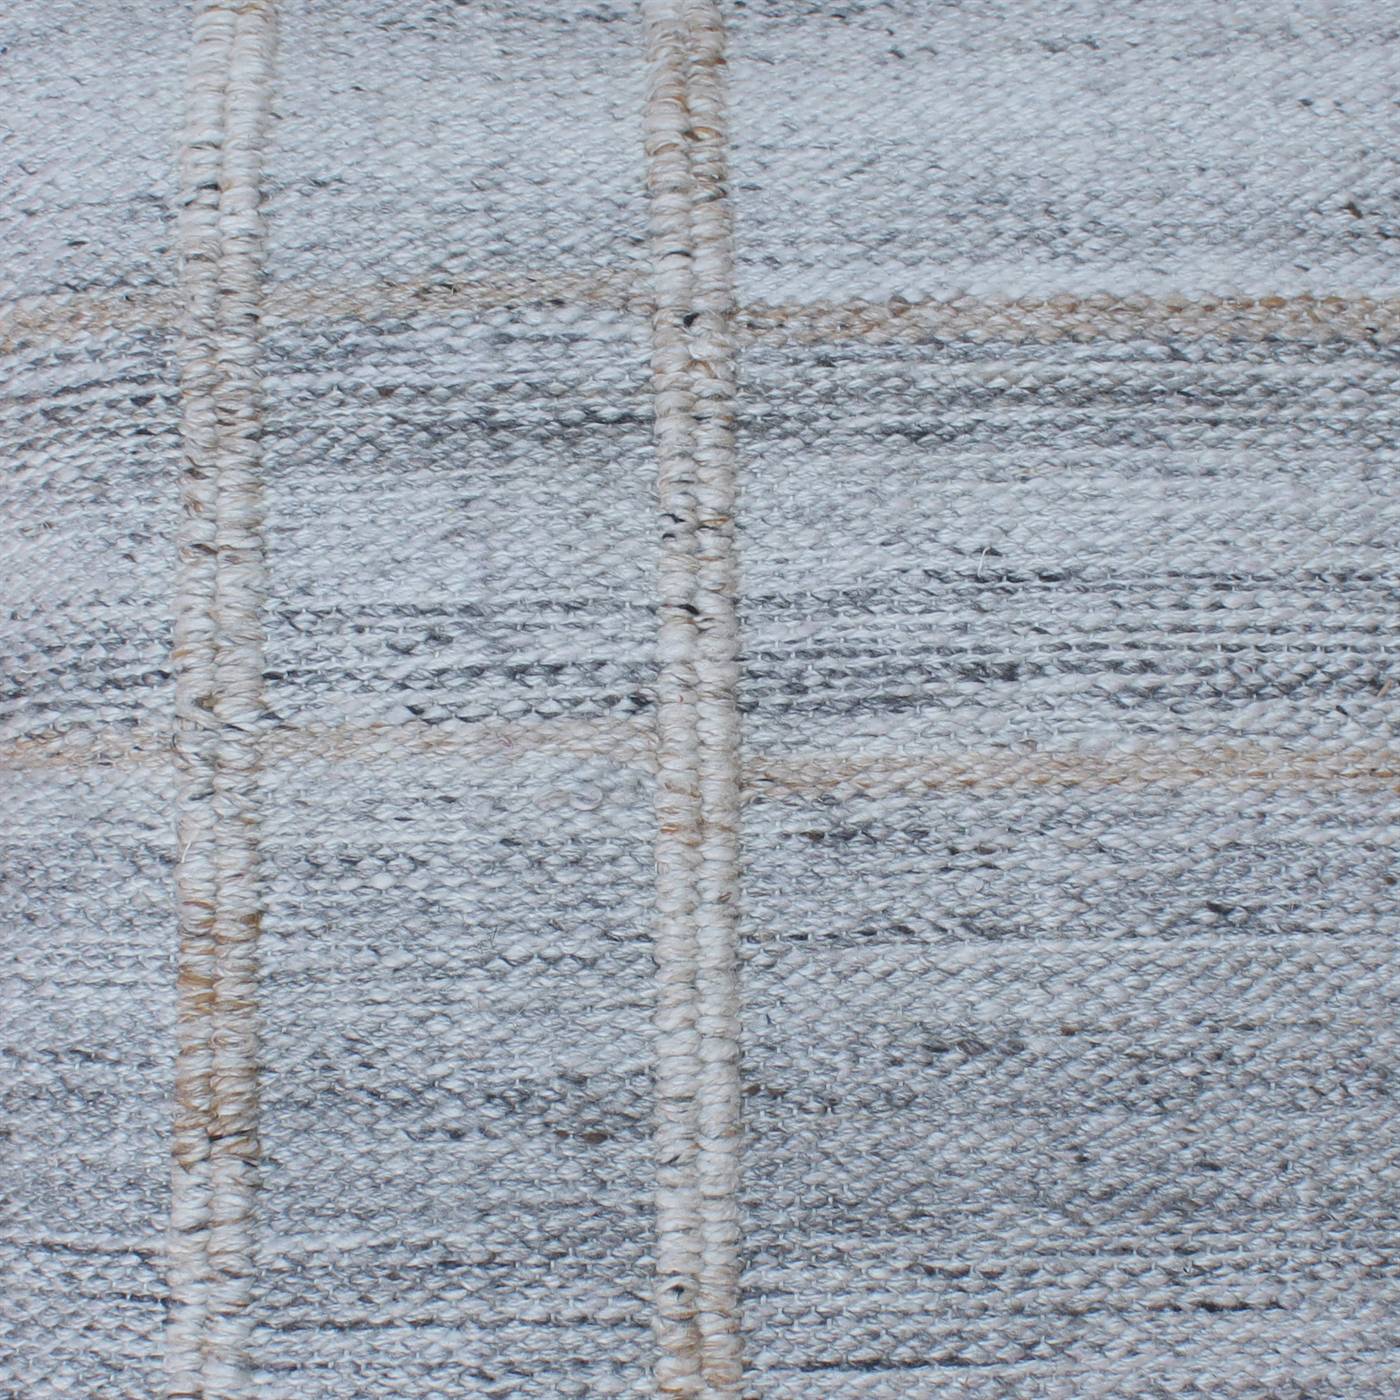 Konig Cushion, 56x56 cm, Grey, PET, Hand Woven, Pitloom, Flat Weave